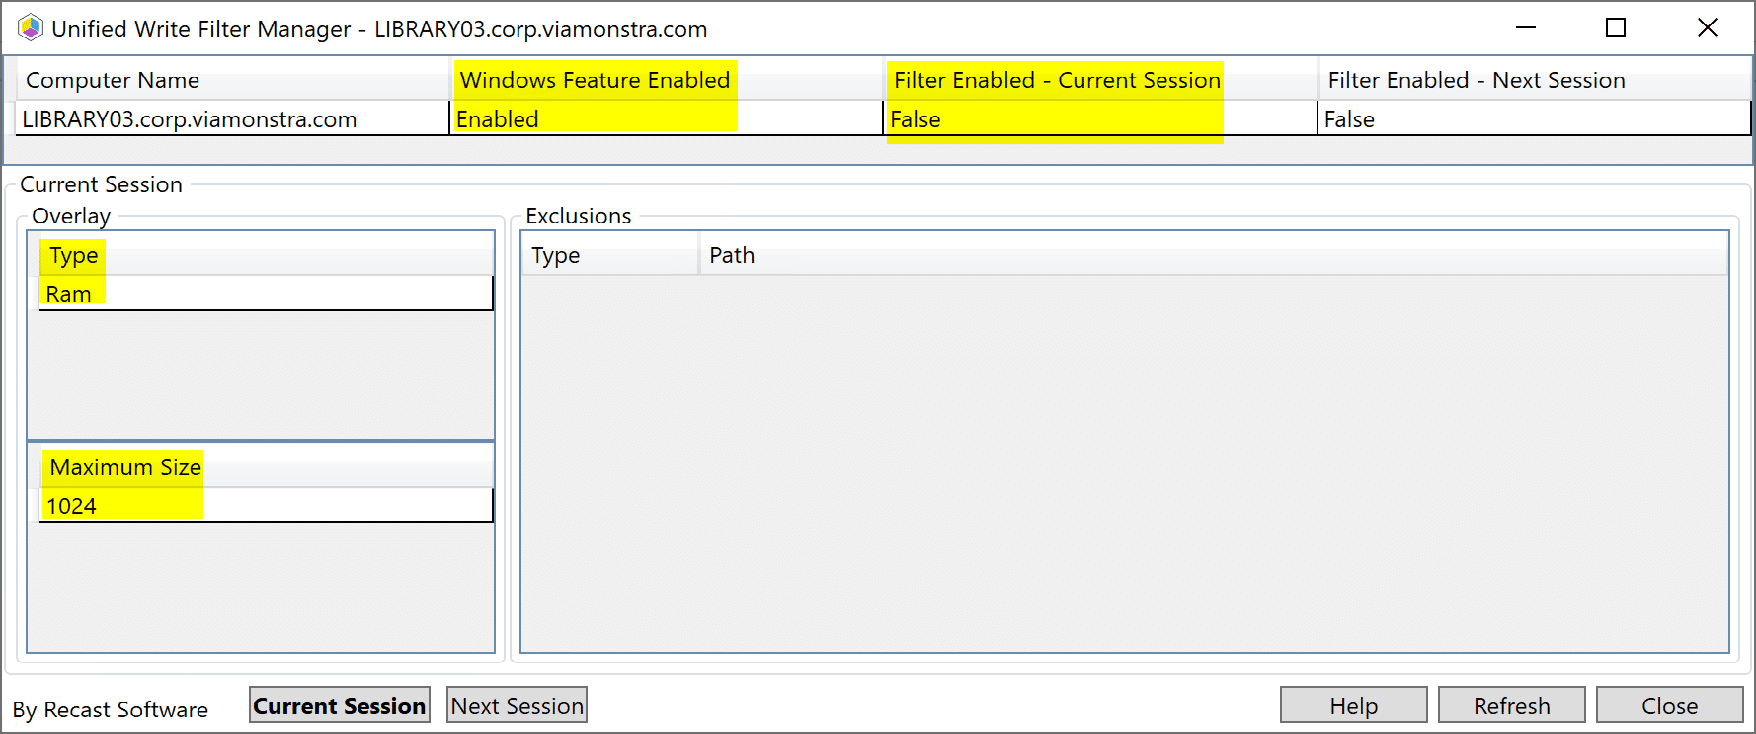 Unified Write Filter Status Tool